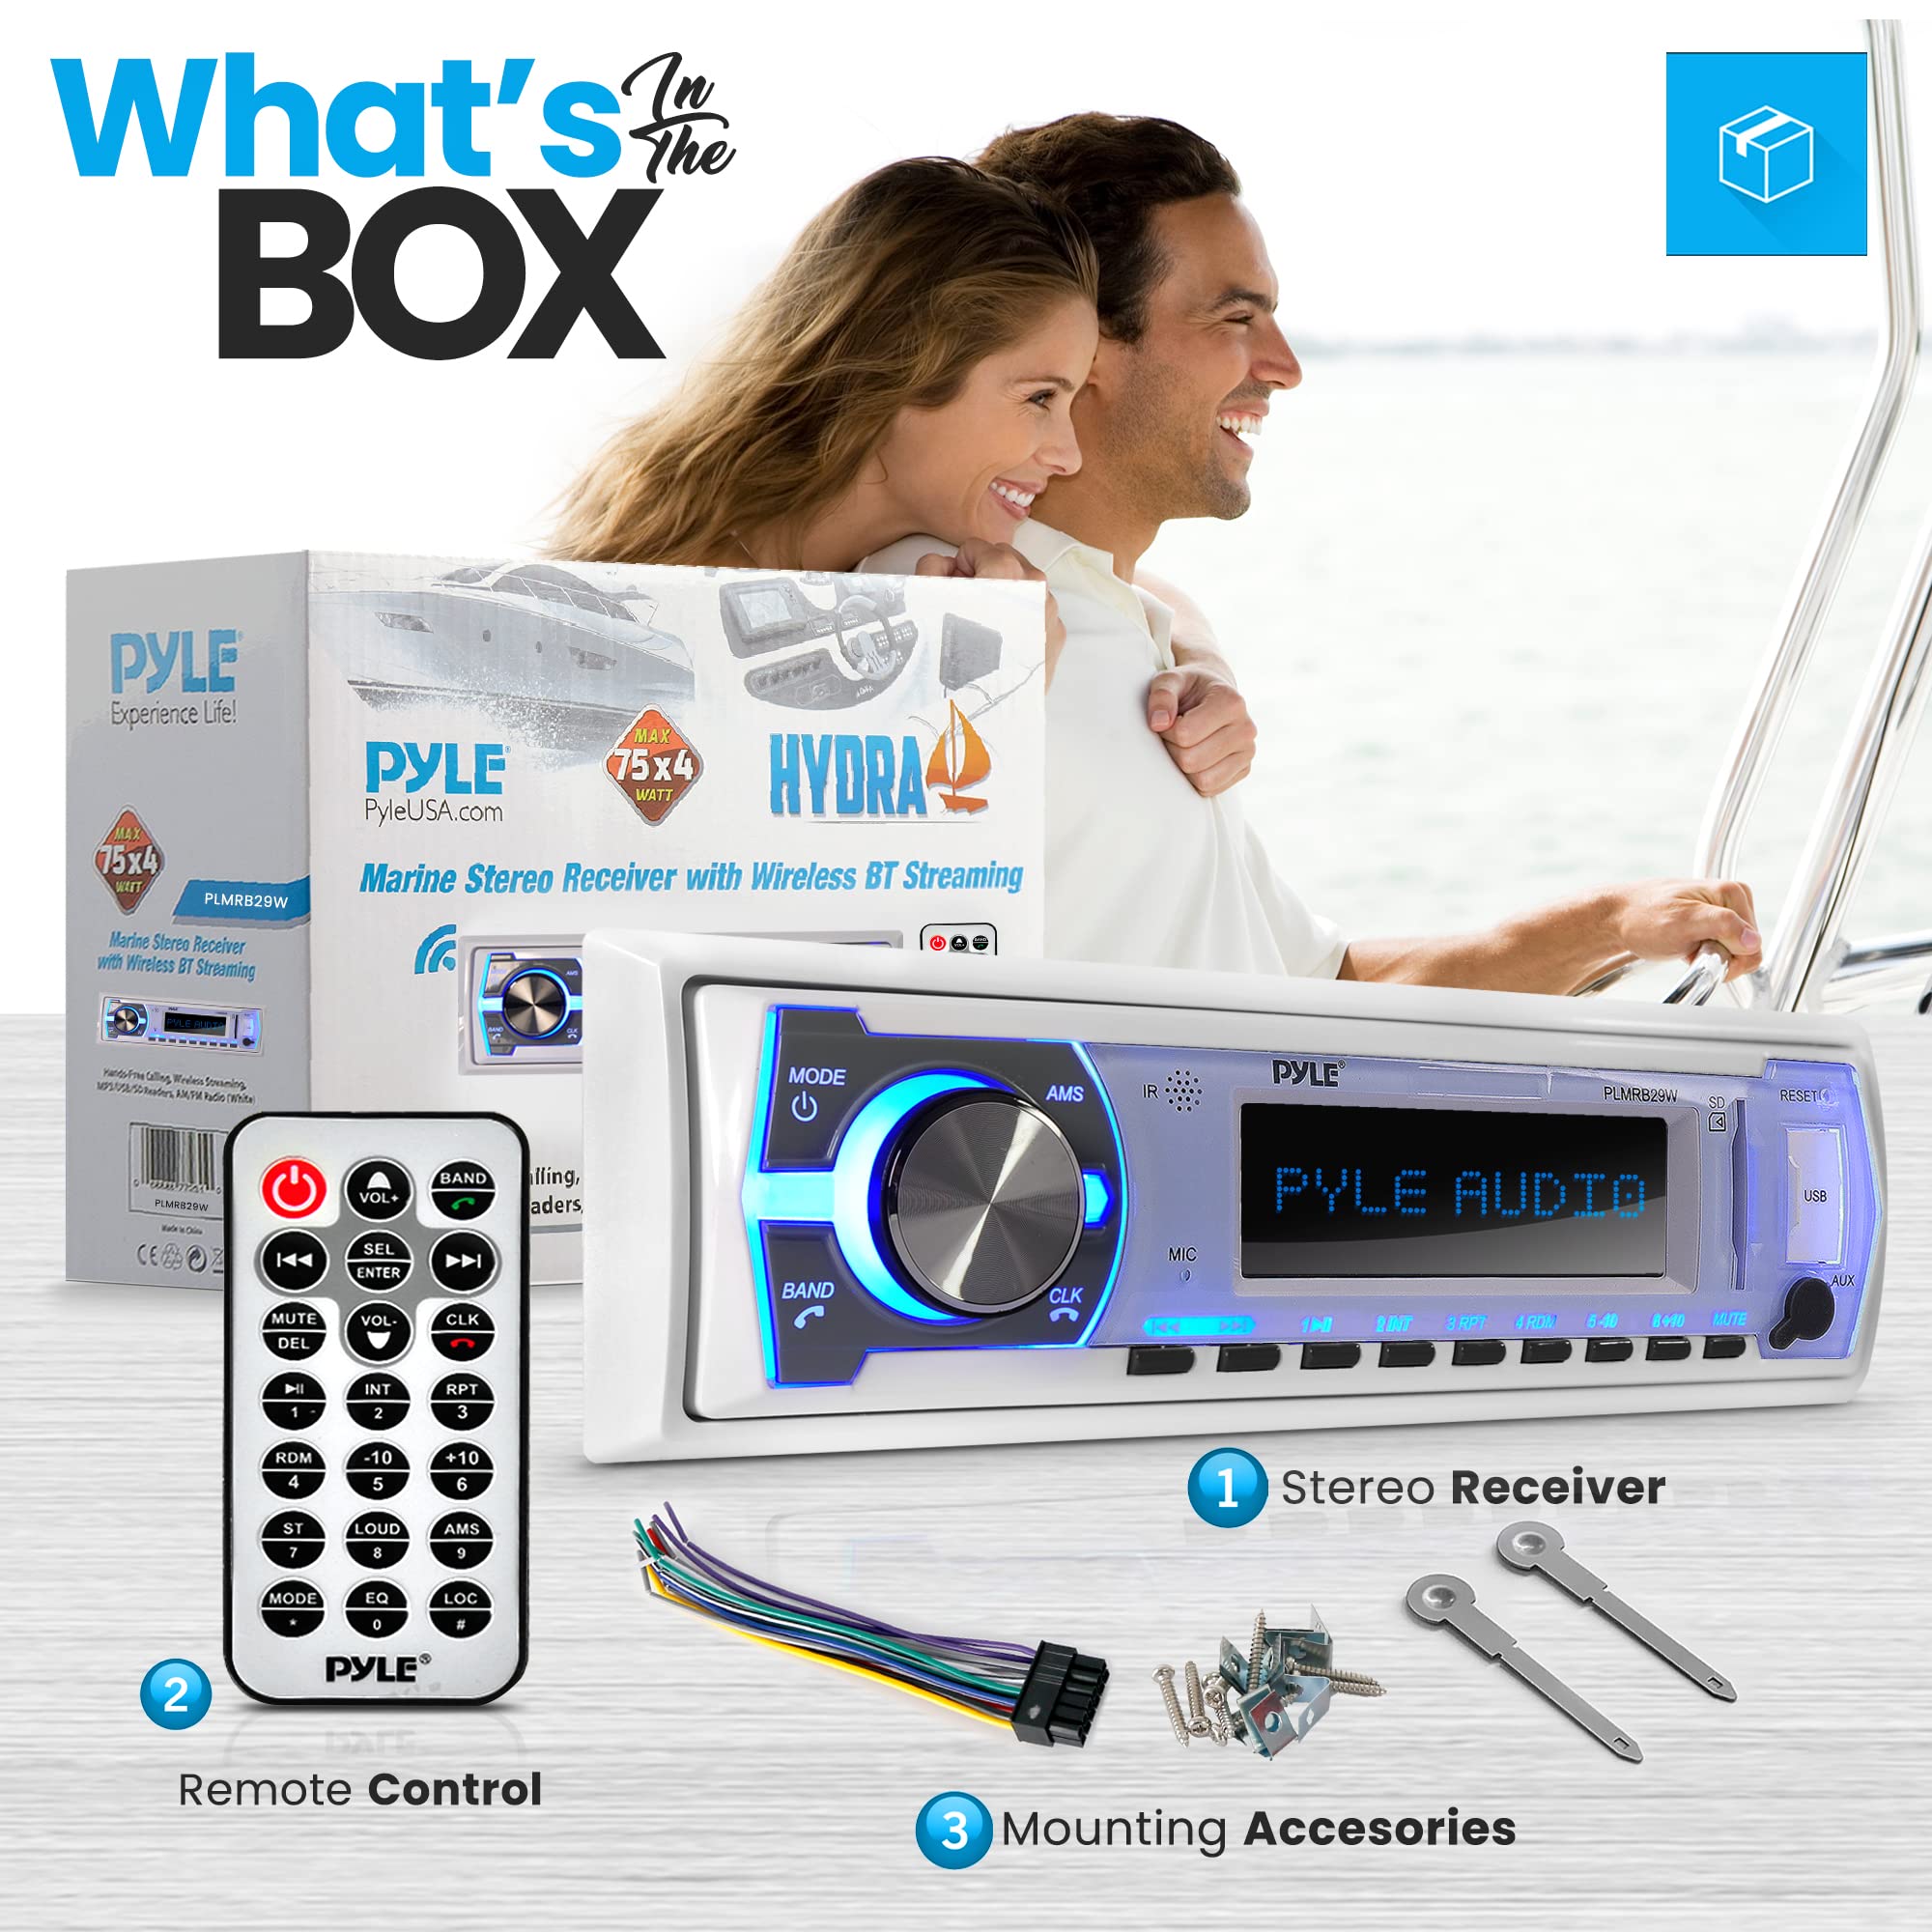 Pyle Marine Bluetooth Stereo Radio - 12v Single DIN Style Boat In dash Radio Receiver System with Built-in Mic, Digital LCD, RCA, MP3, USB, SD, AM FM Radio - Remote Control - PLMRB29W (White)